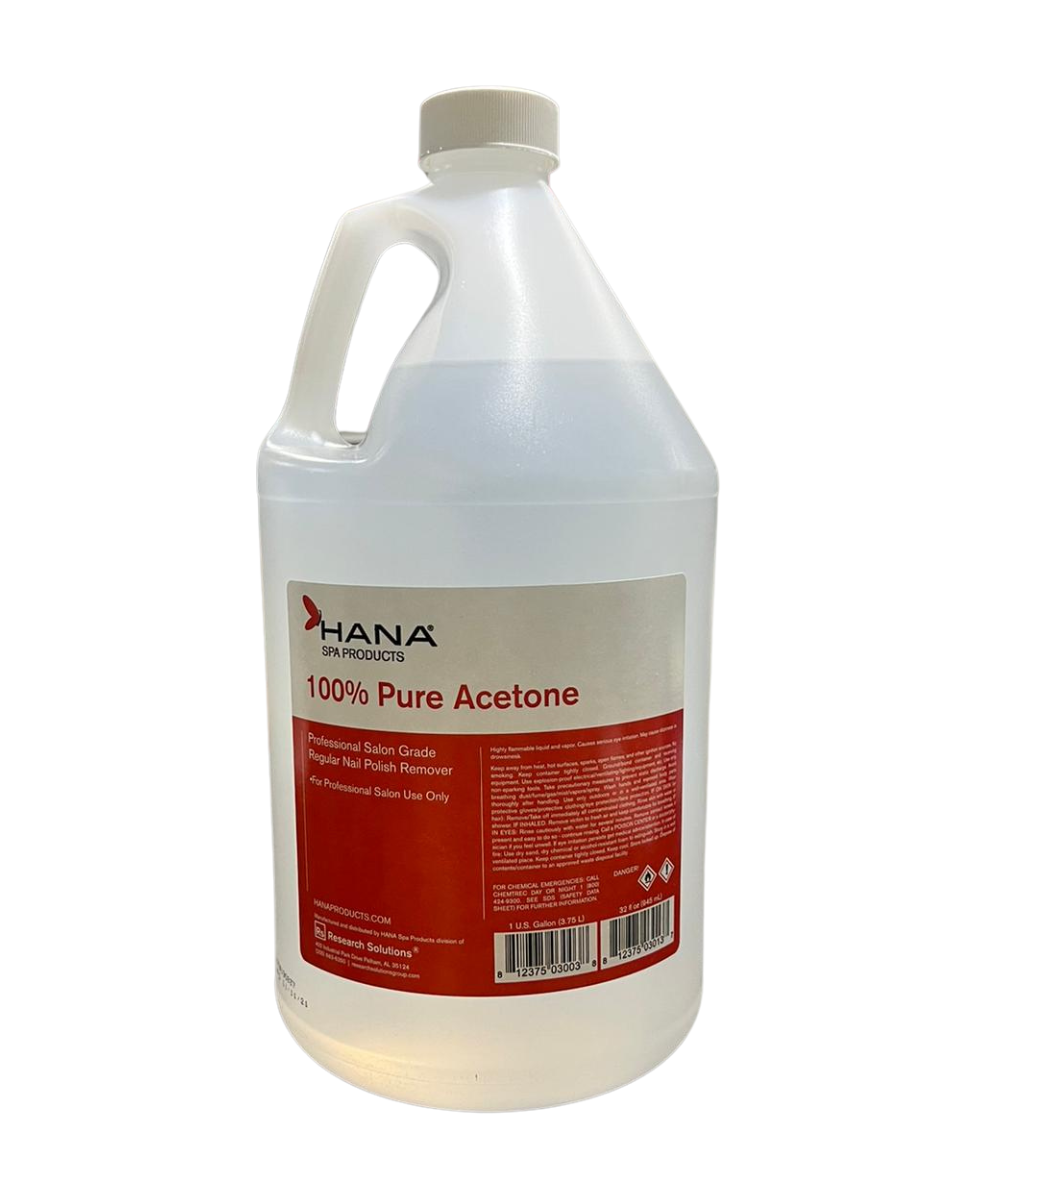 HANA SPA PRODUCTS HANA - Regular Nail Polish Remover - 100% Pure Acetone Gallon